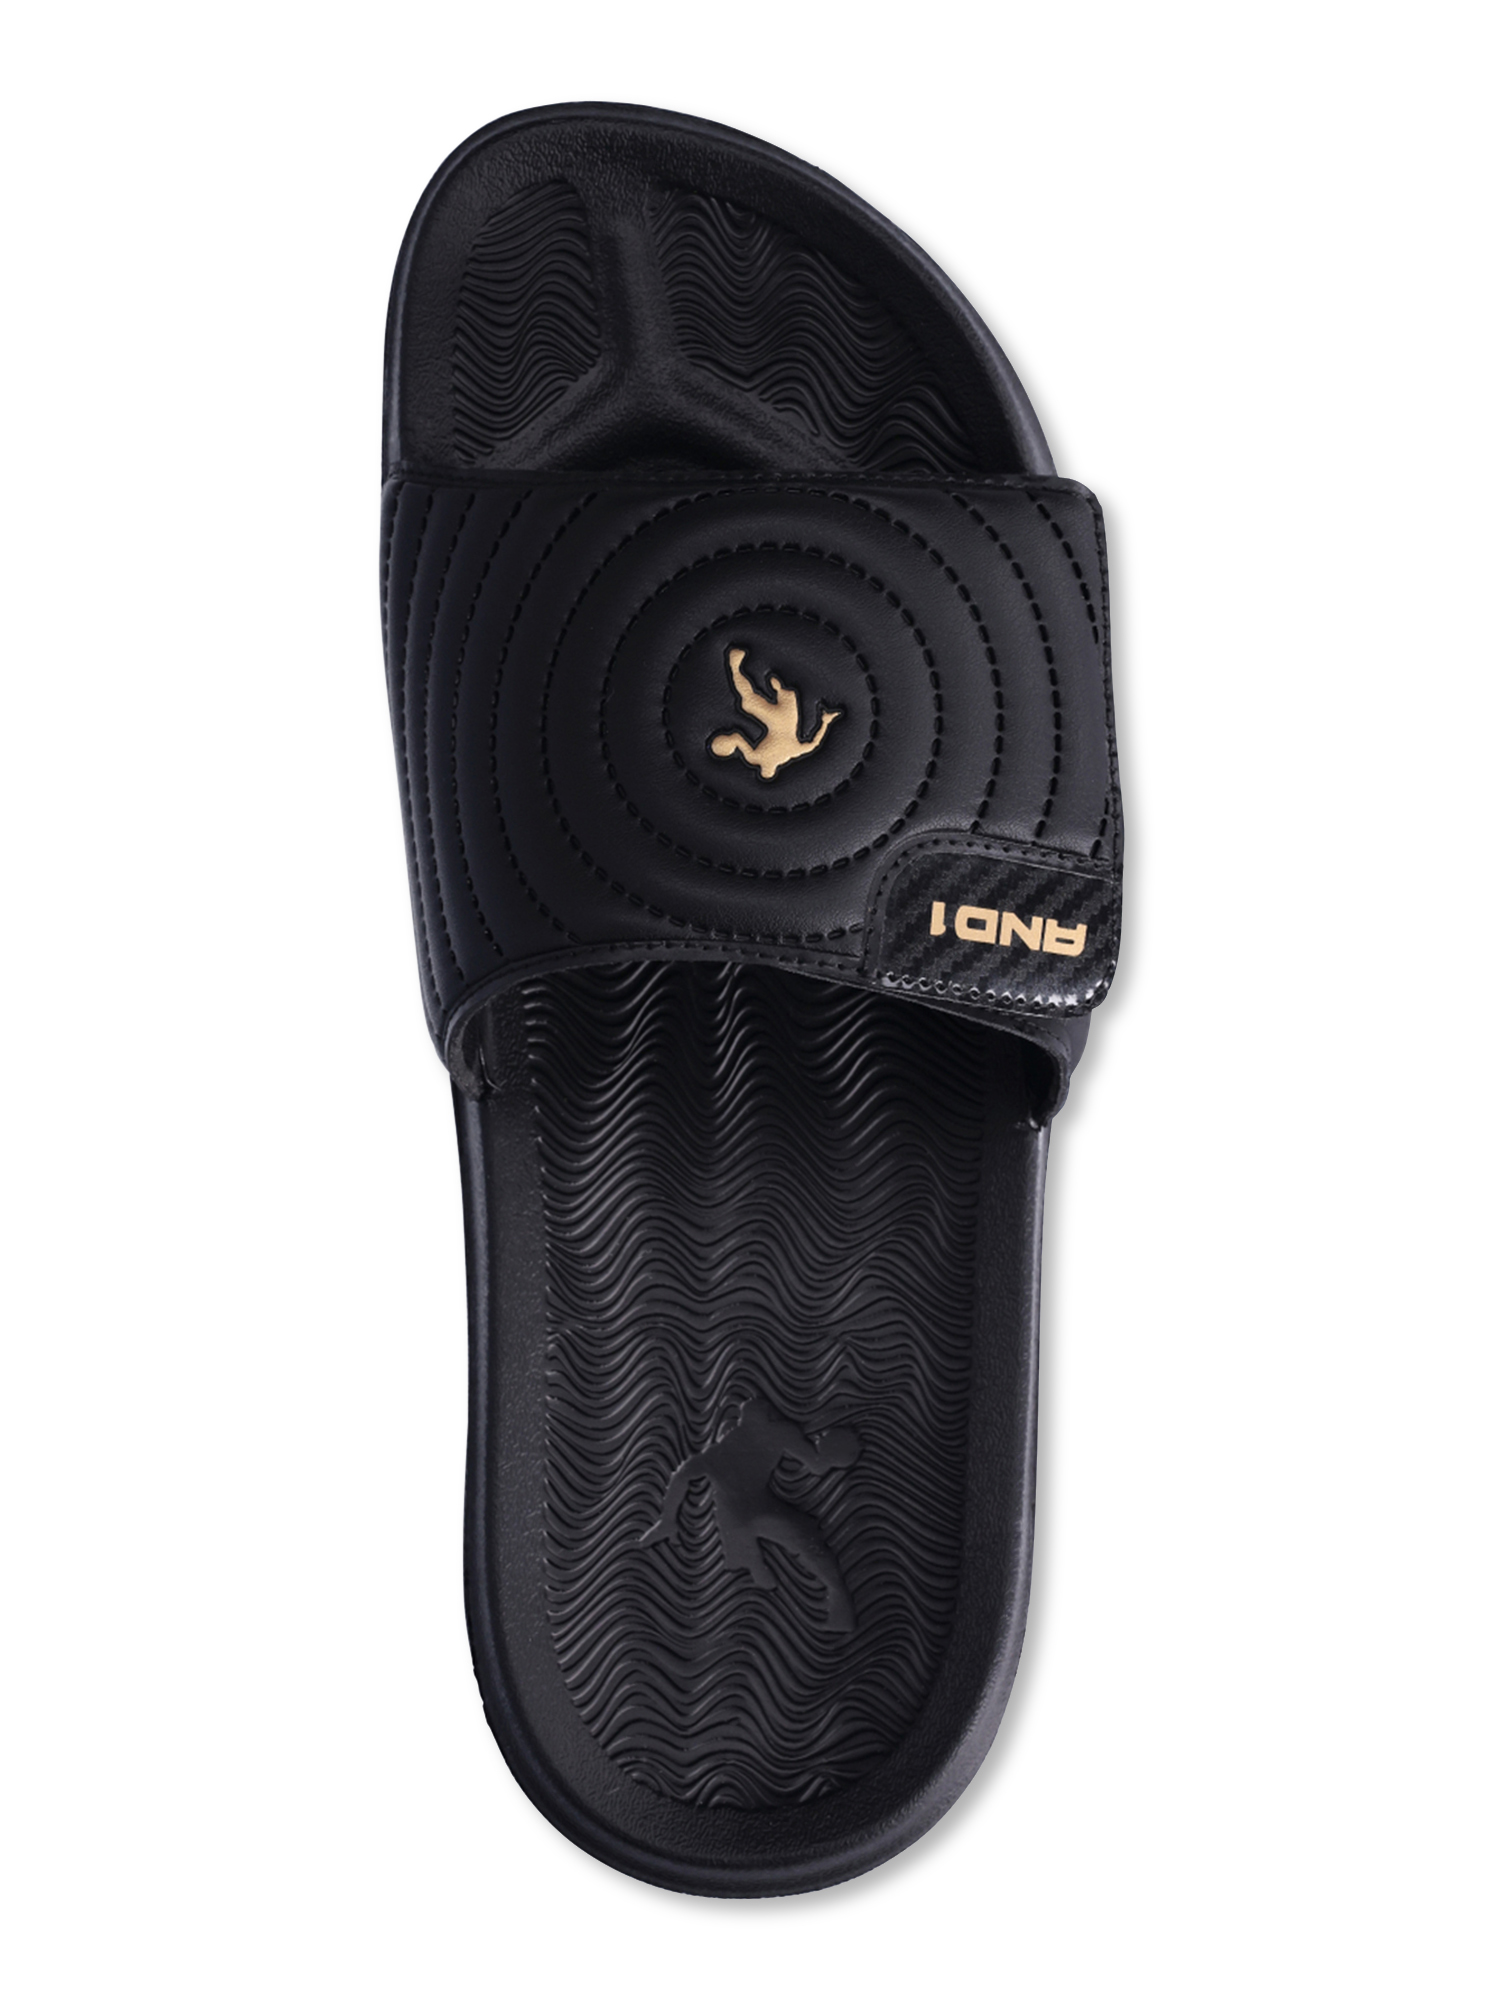 AND1 Men’s Athletic Adjustable Swirl Slide Sandals - Walmart.com